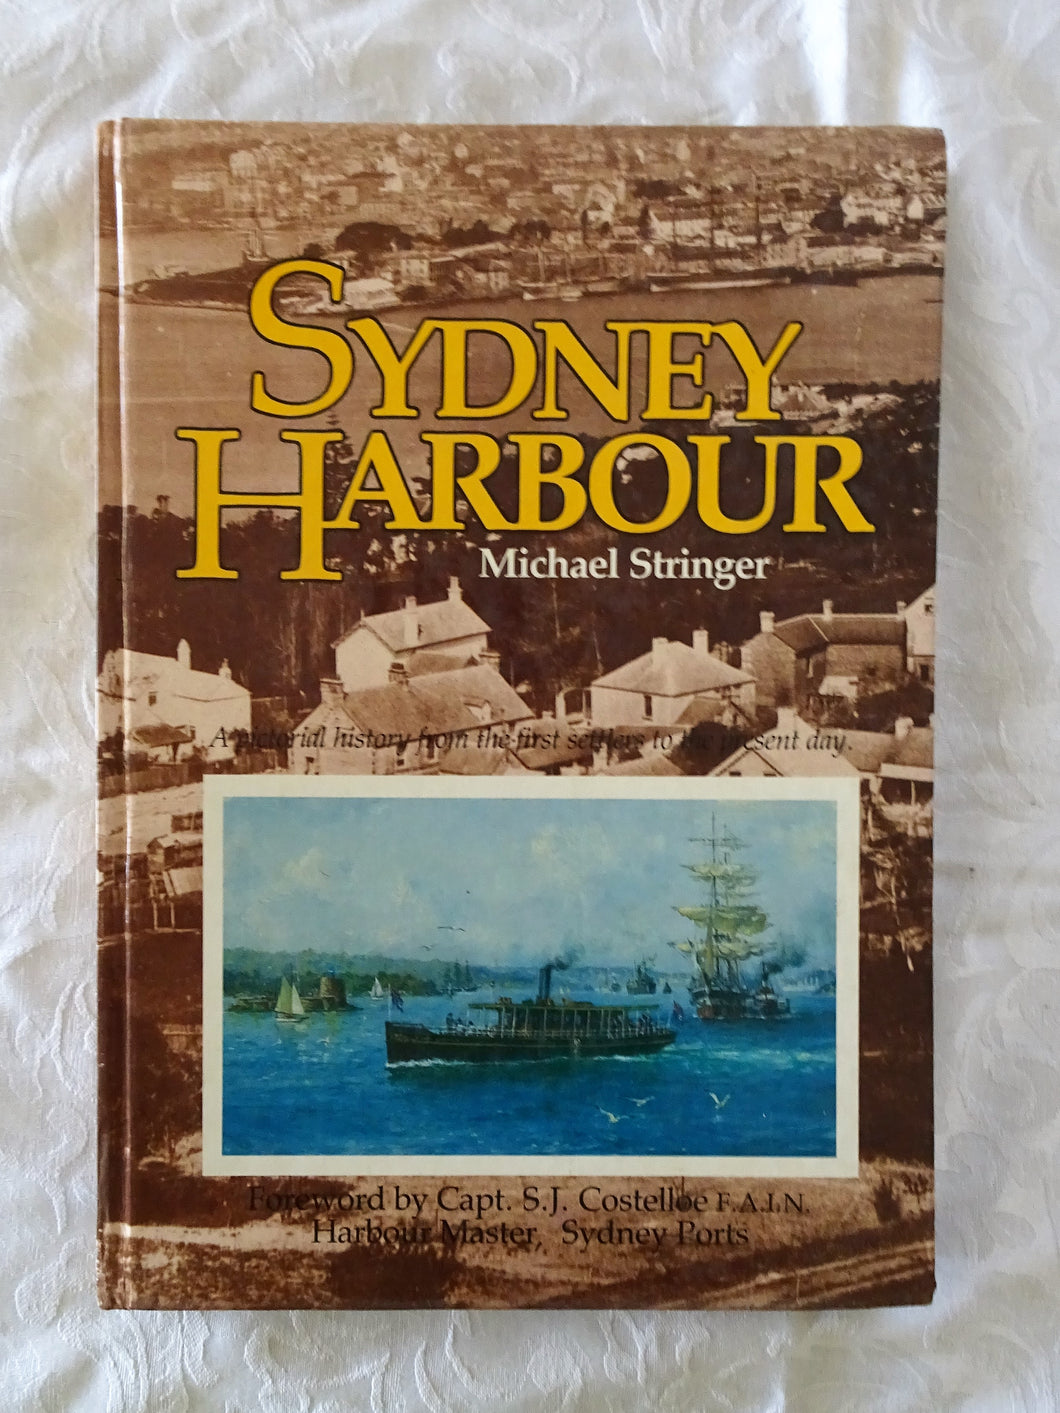 Sydney Harbour by Michael Stringer